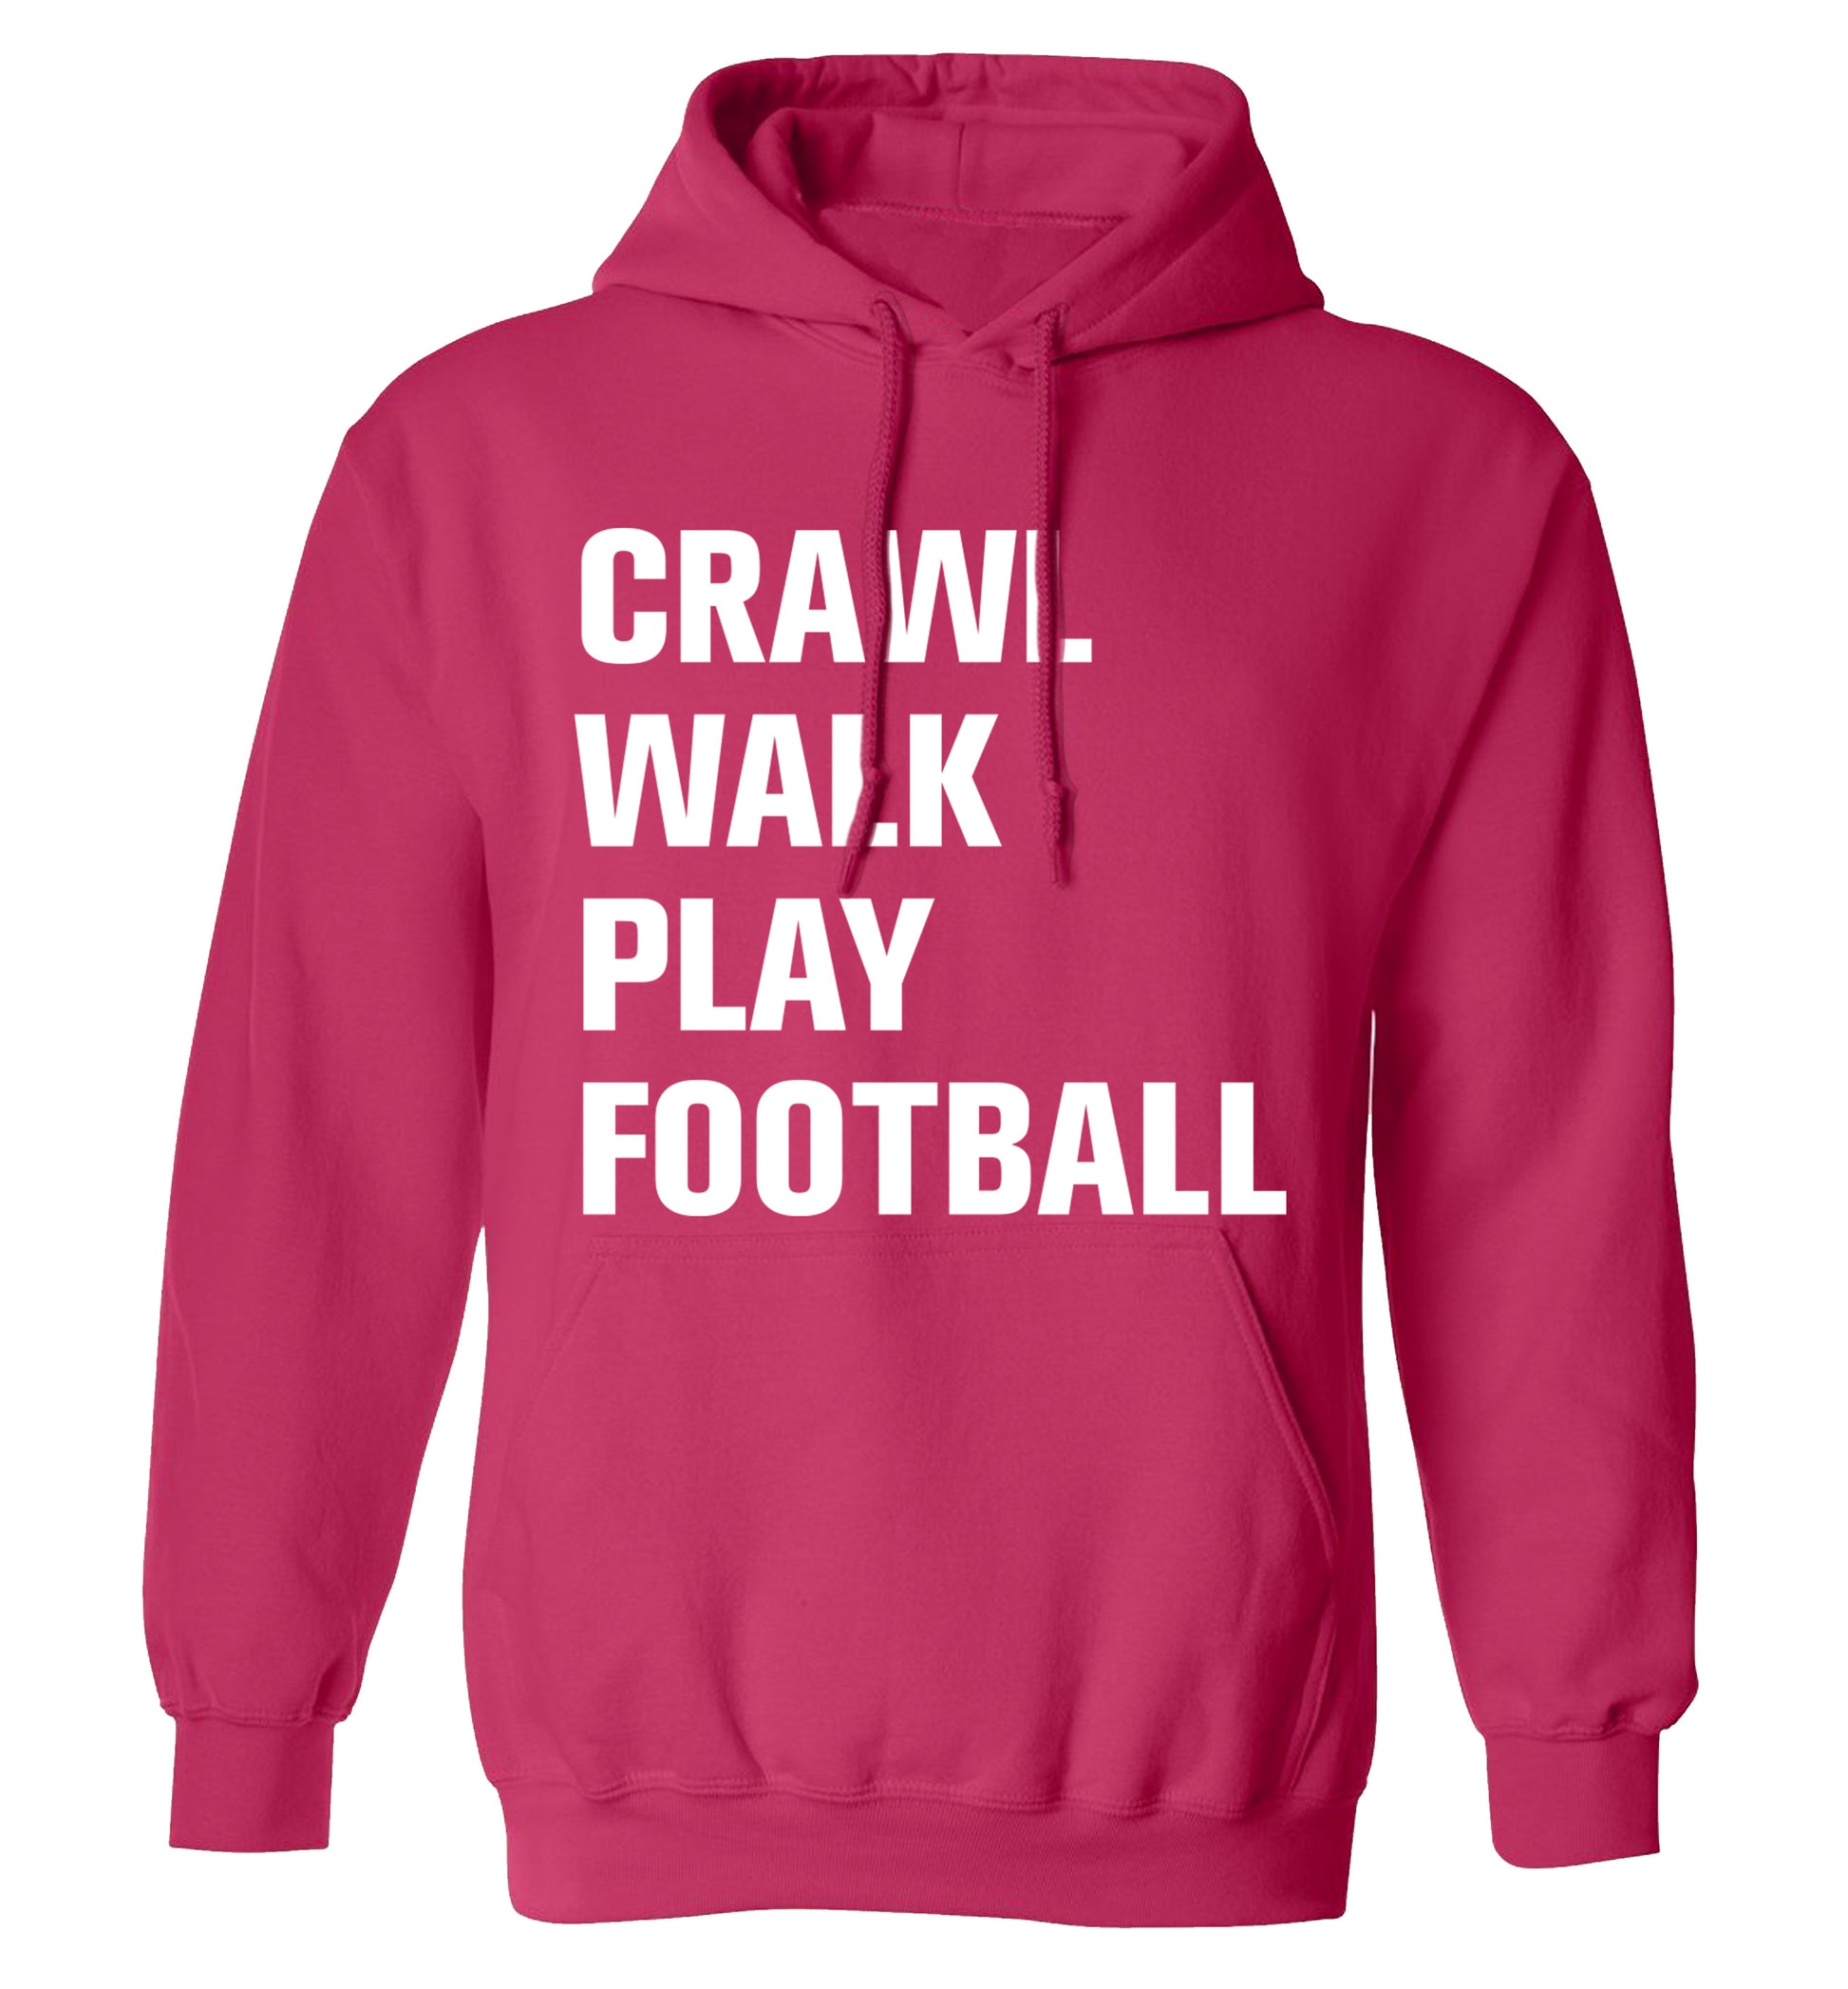 Crawl, walk, play football adults unisex pink hoodie 2XL